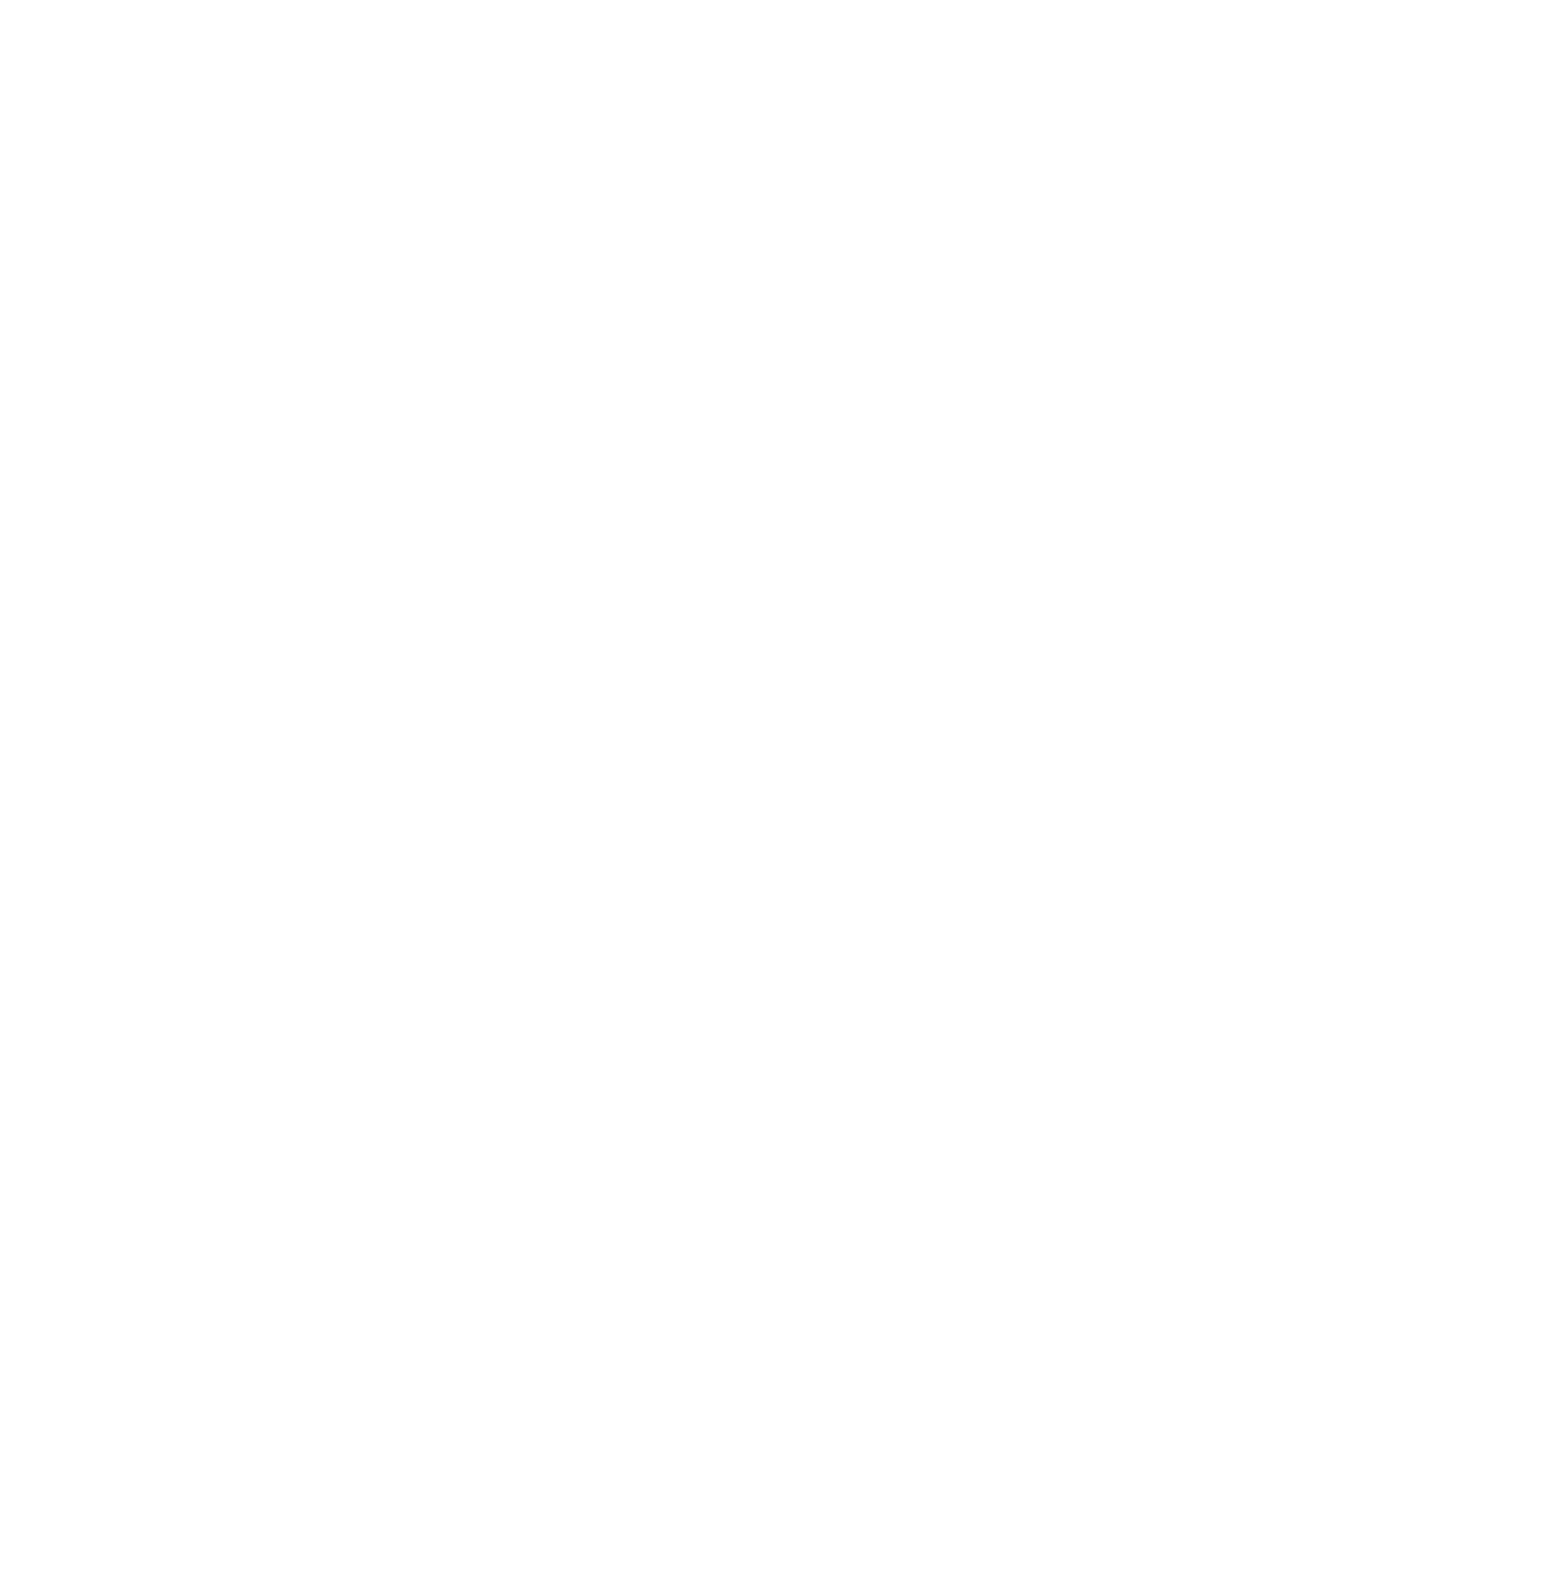 Golub Capital logo for dark backgrounds (transparent PNG)